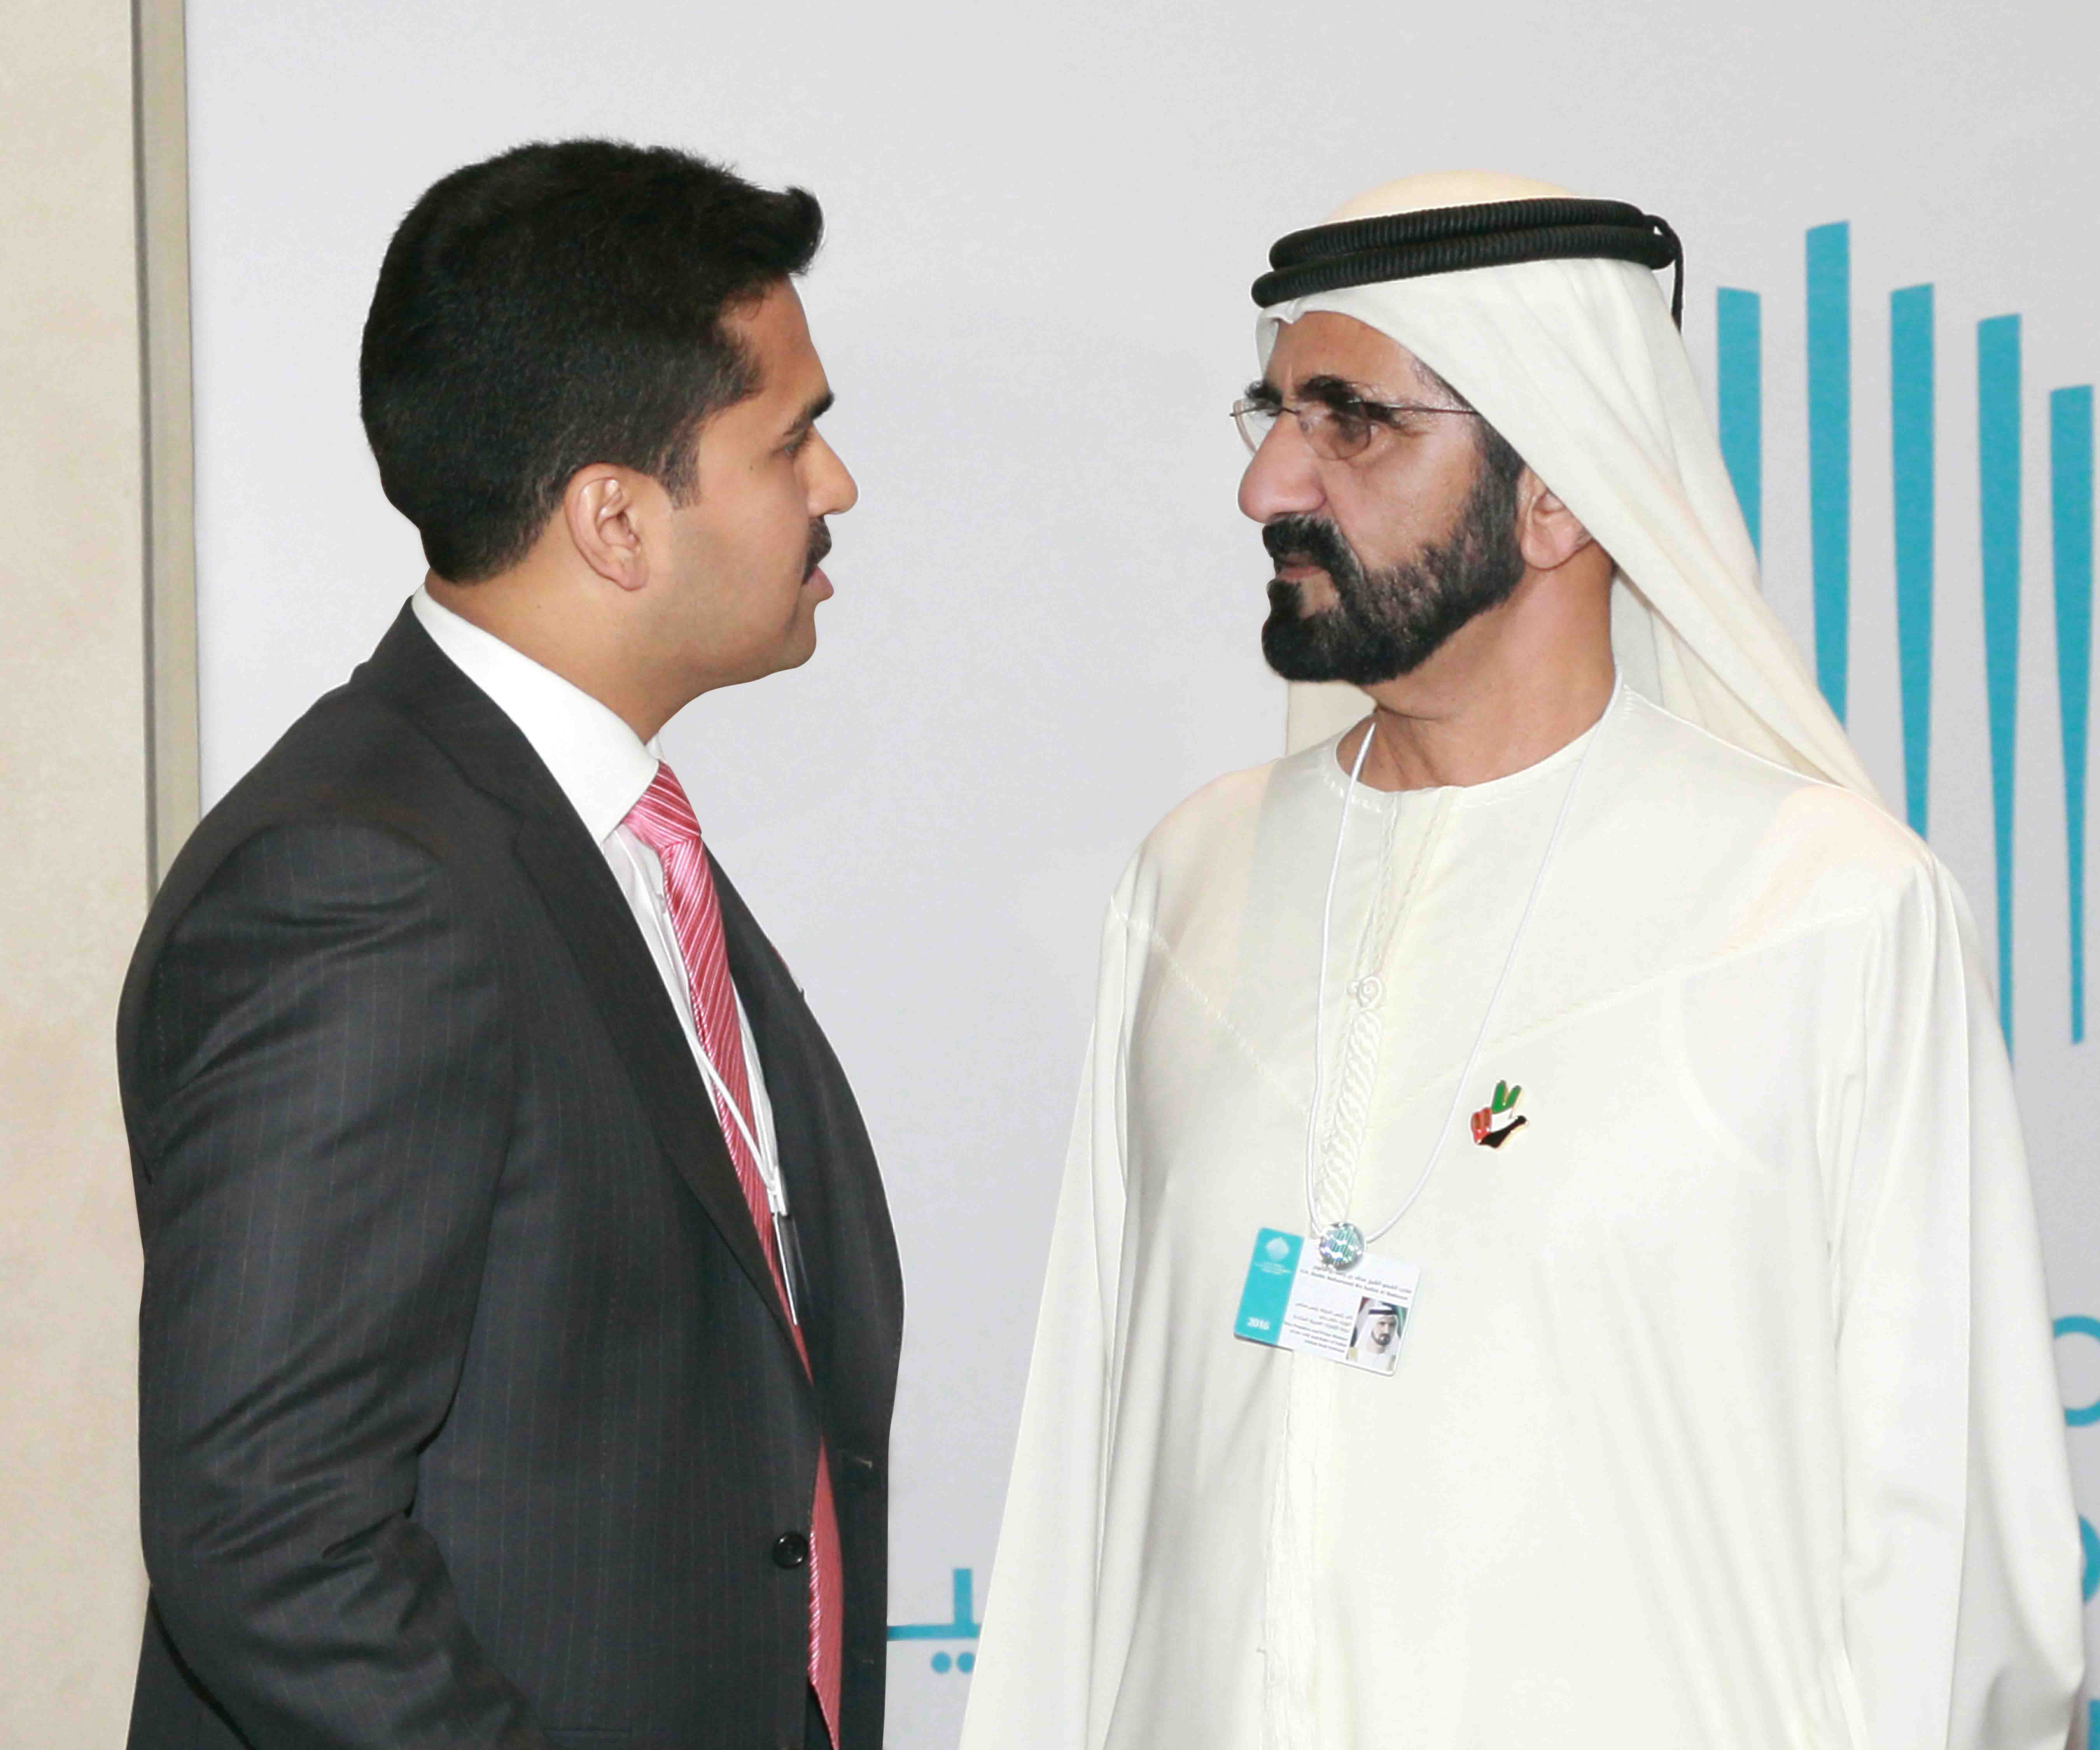 With Sheikh Mohammad Bin Rashid Al Maktoum, Vice President and Prime Minister of the UAE and Ruler of Dubai